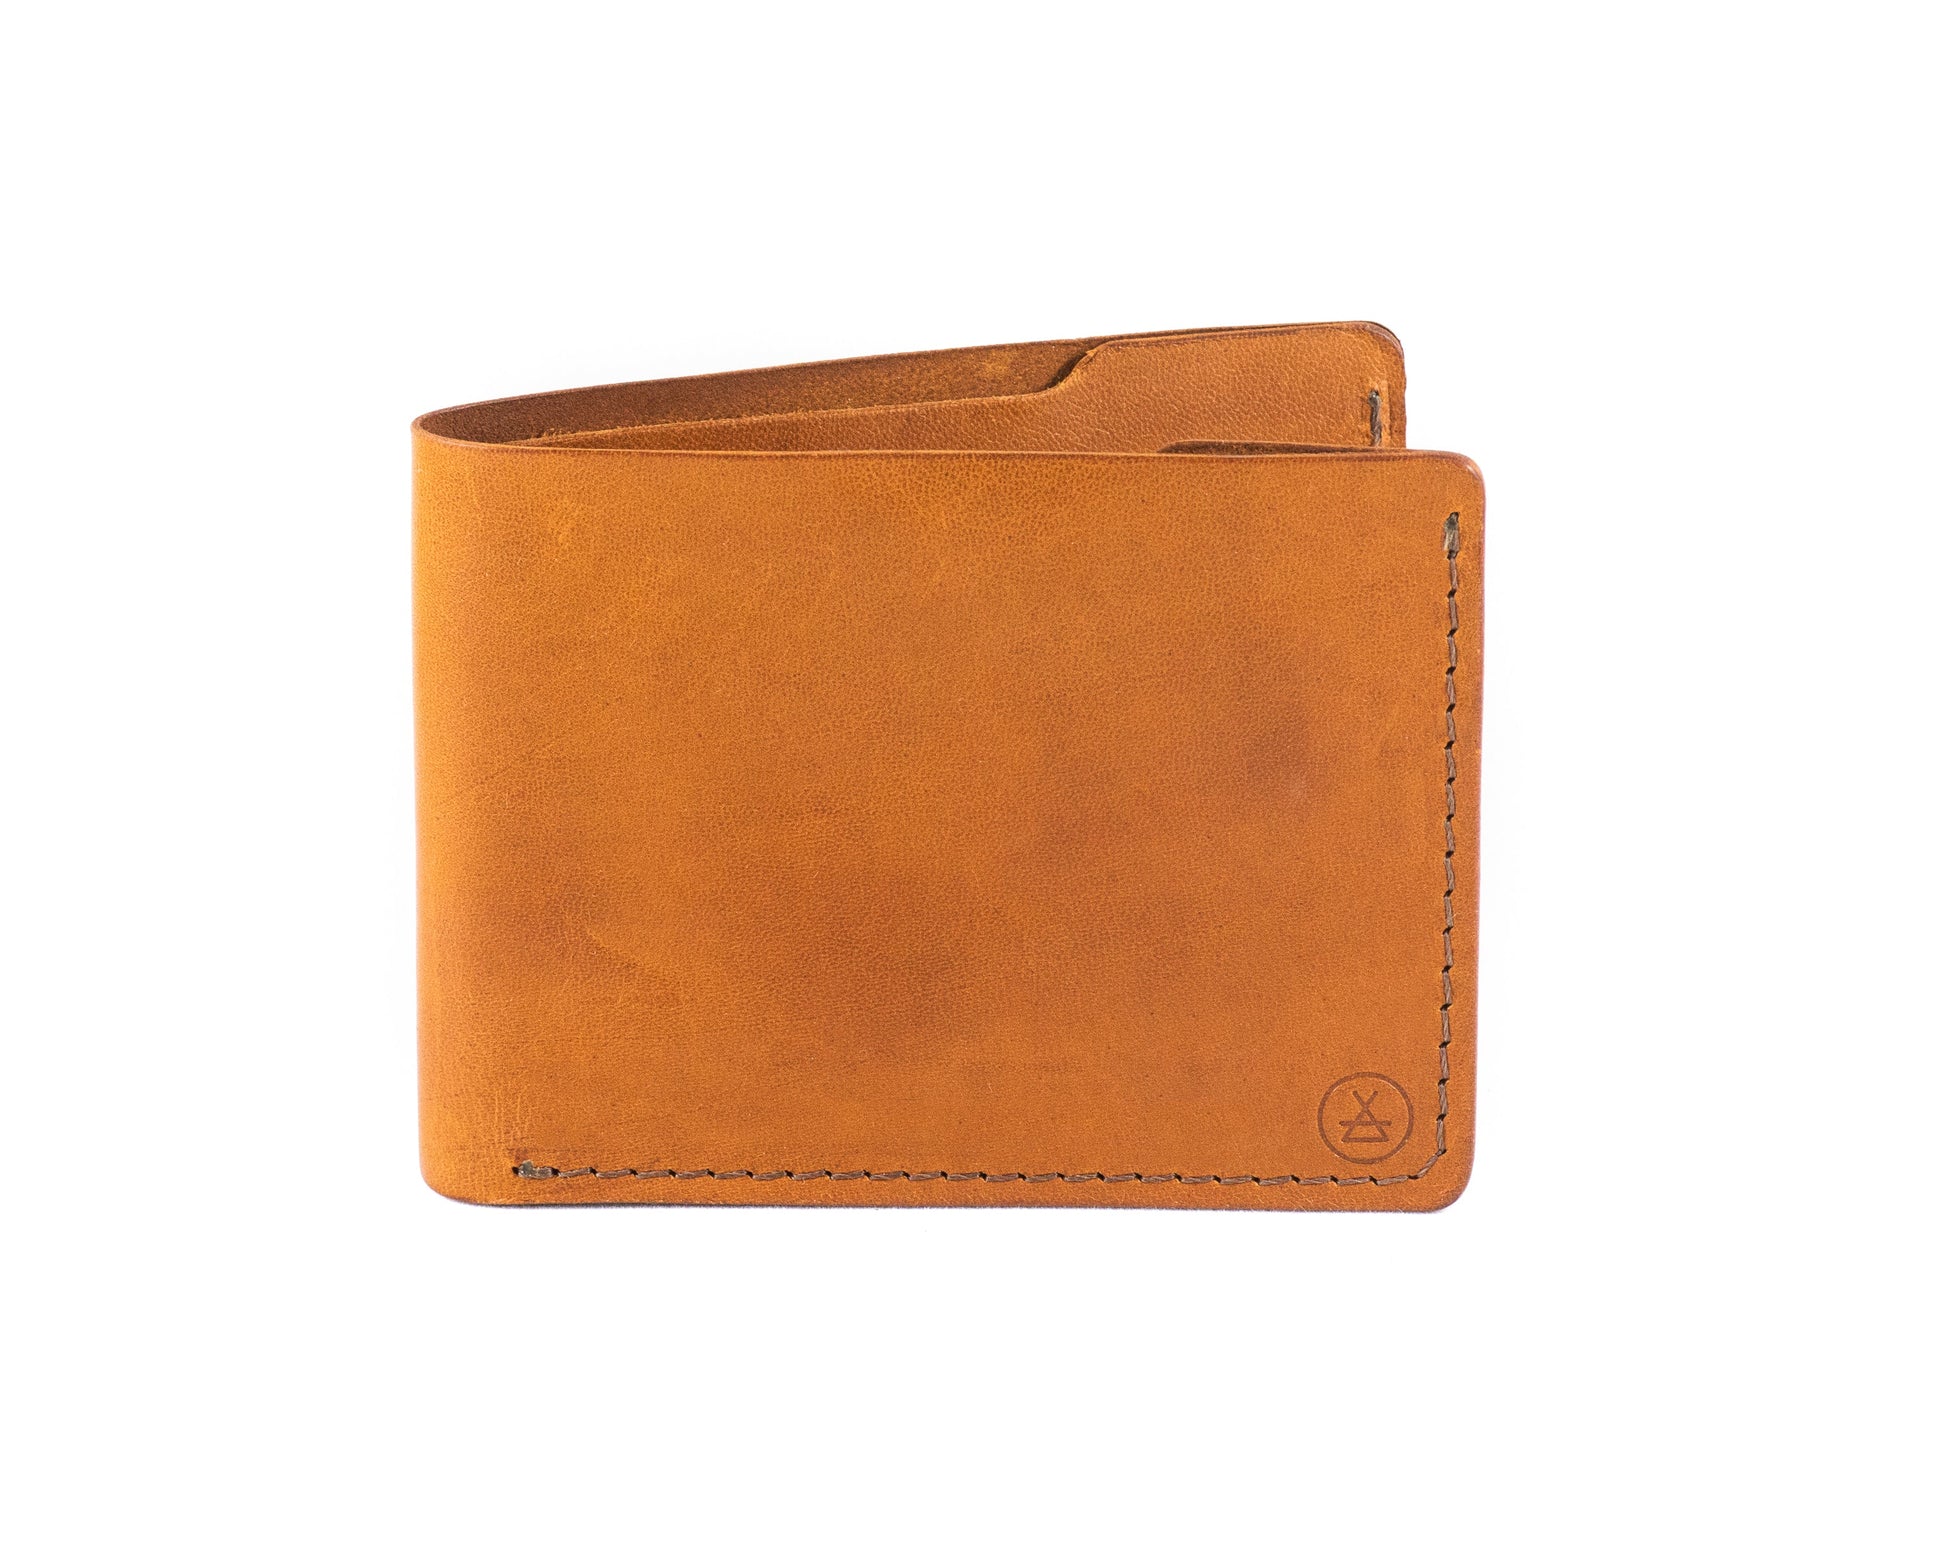 Classic bifold slim wallet in caramel Kangaroo leather - Kohutt™ - made in Tasmania